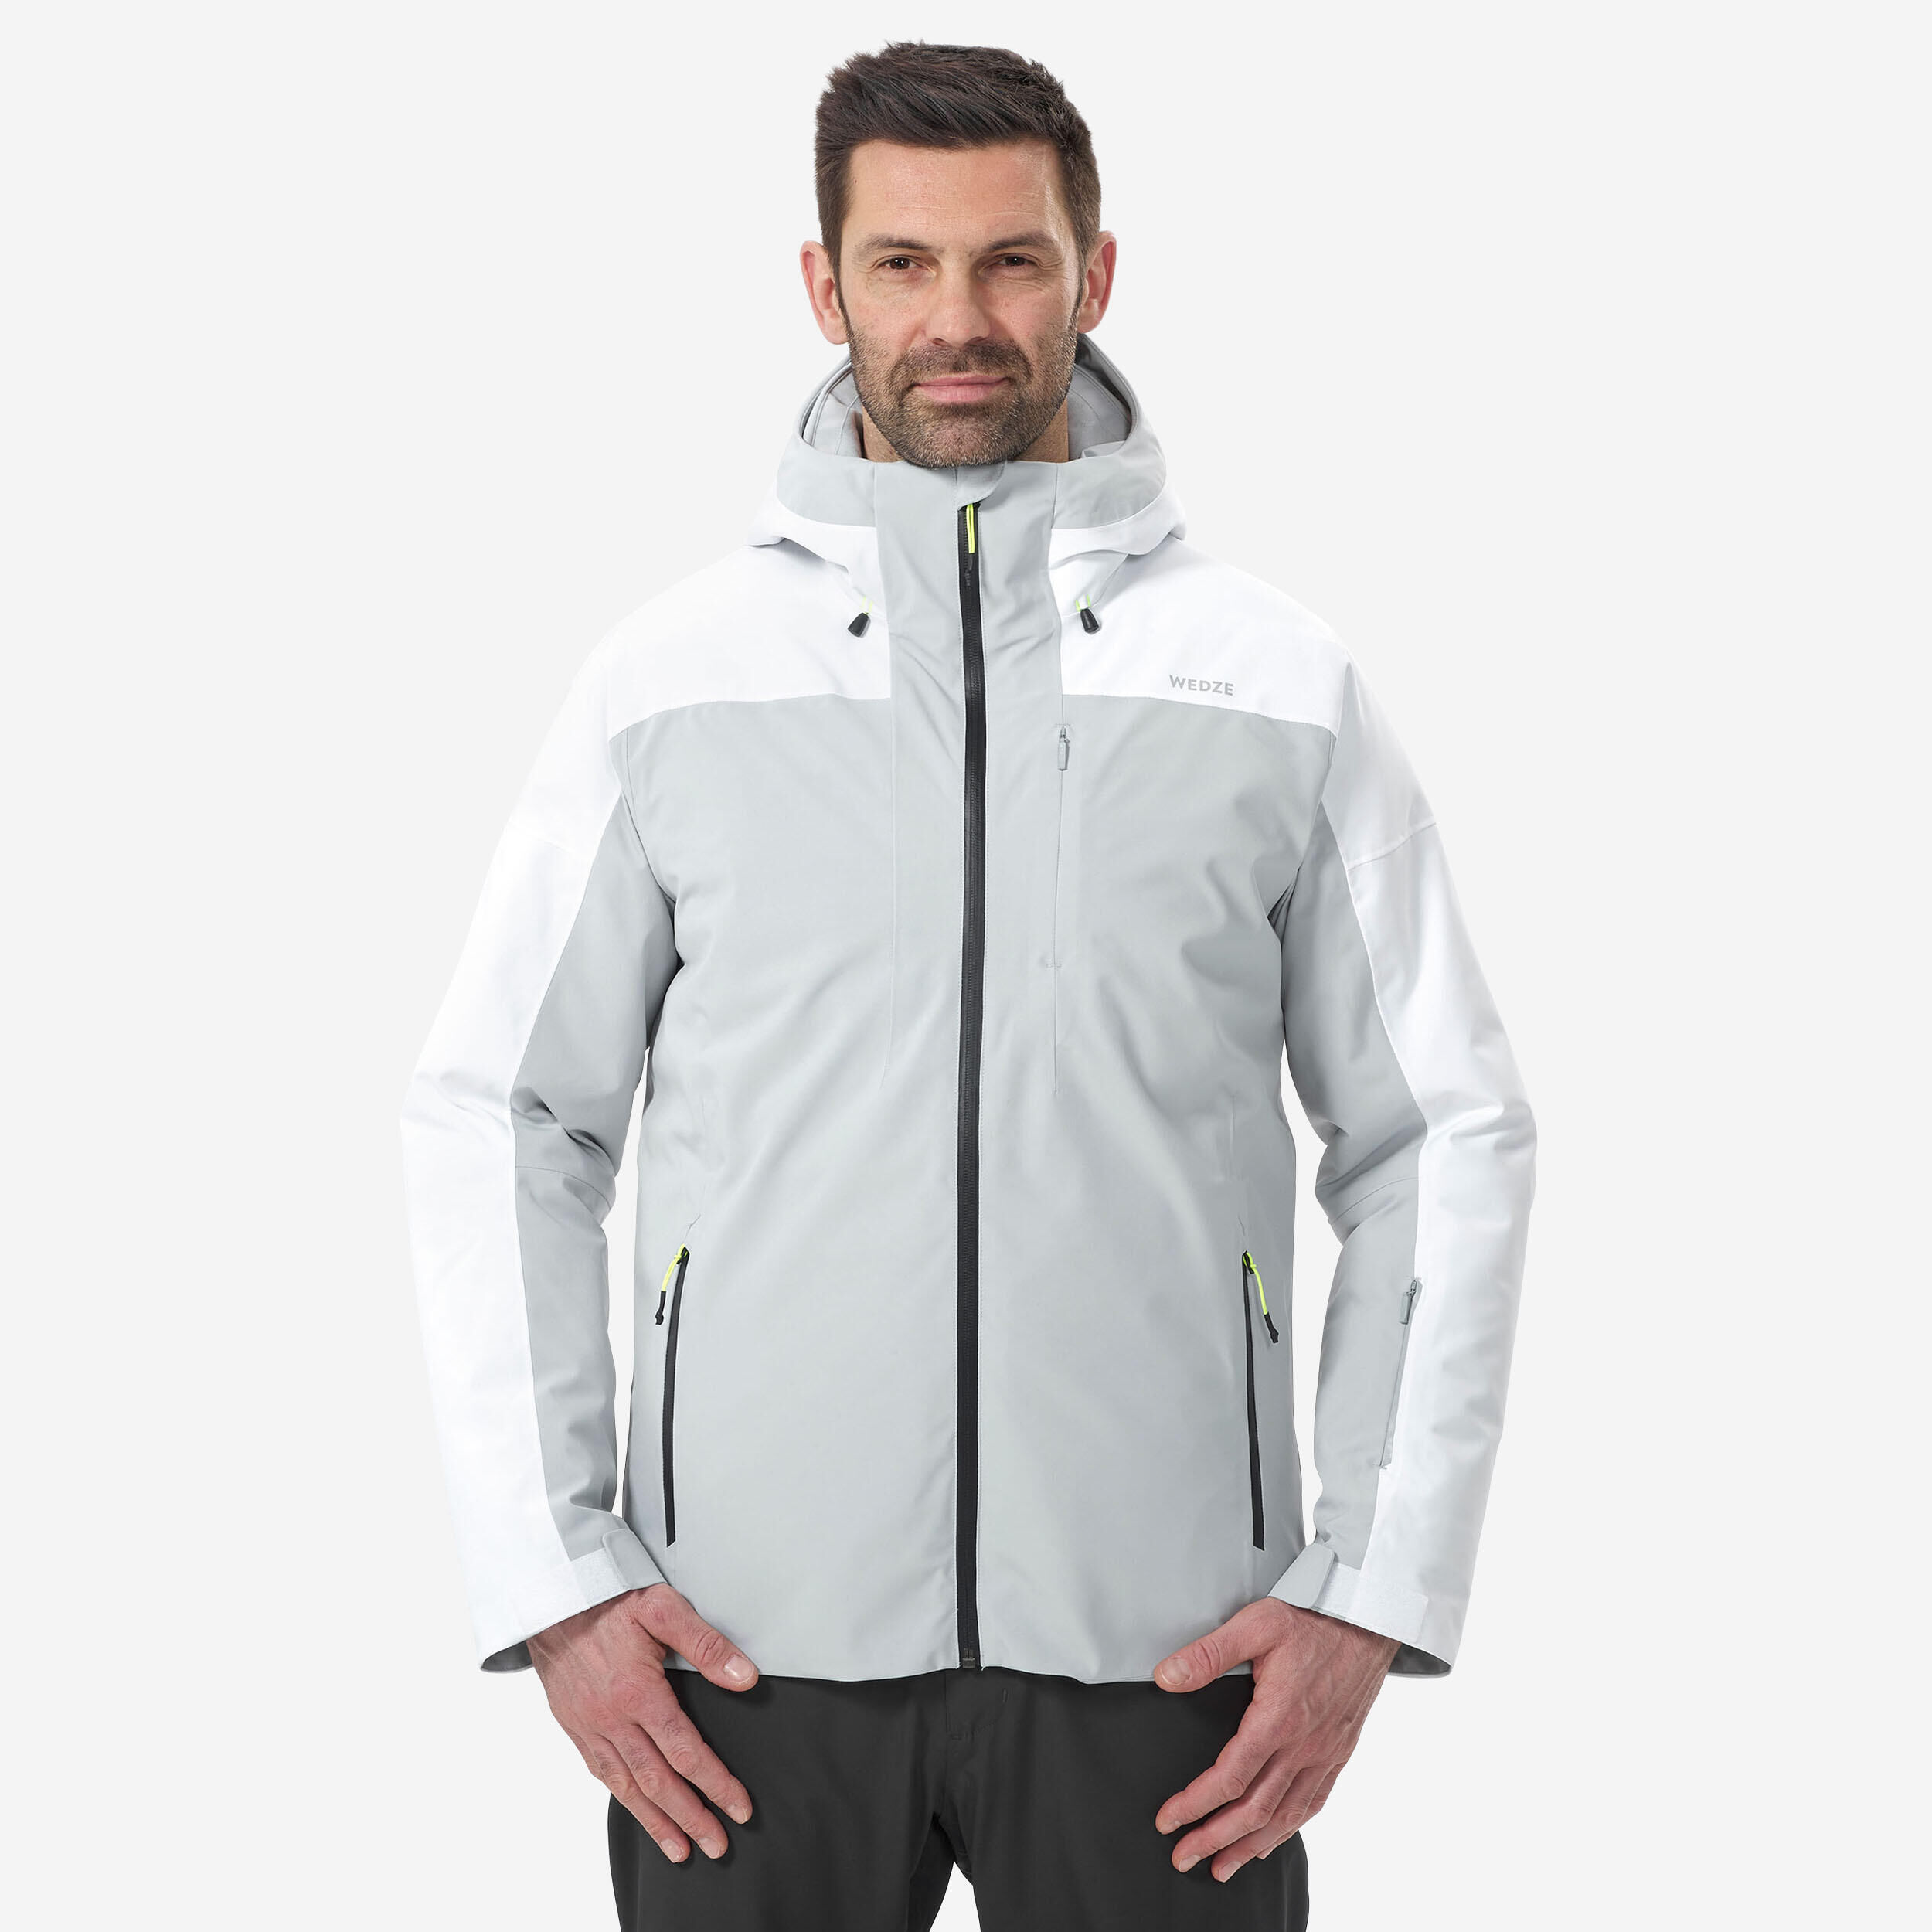 WEDZE Men’s Warm Ski Jacket 500 - Grey/White